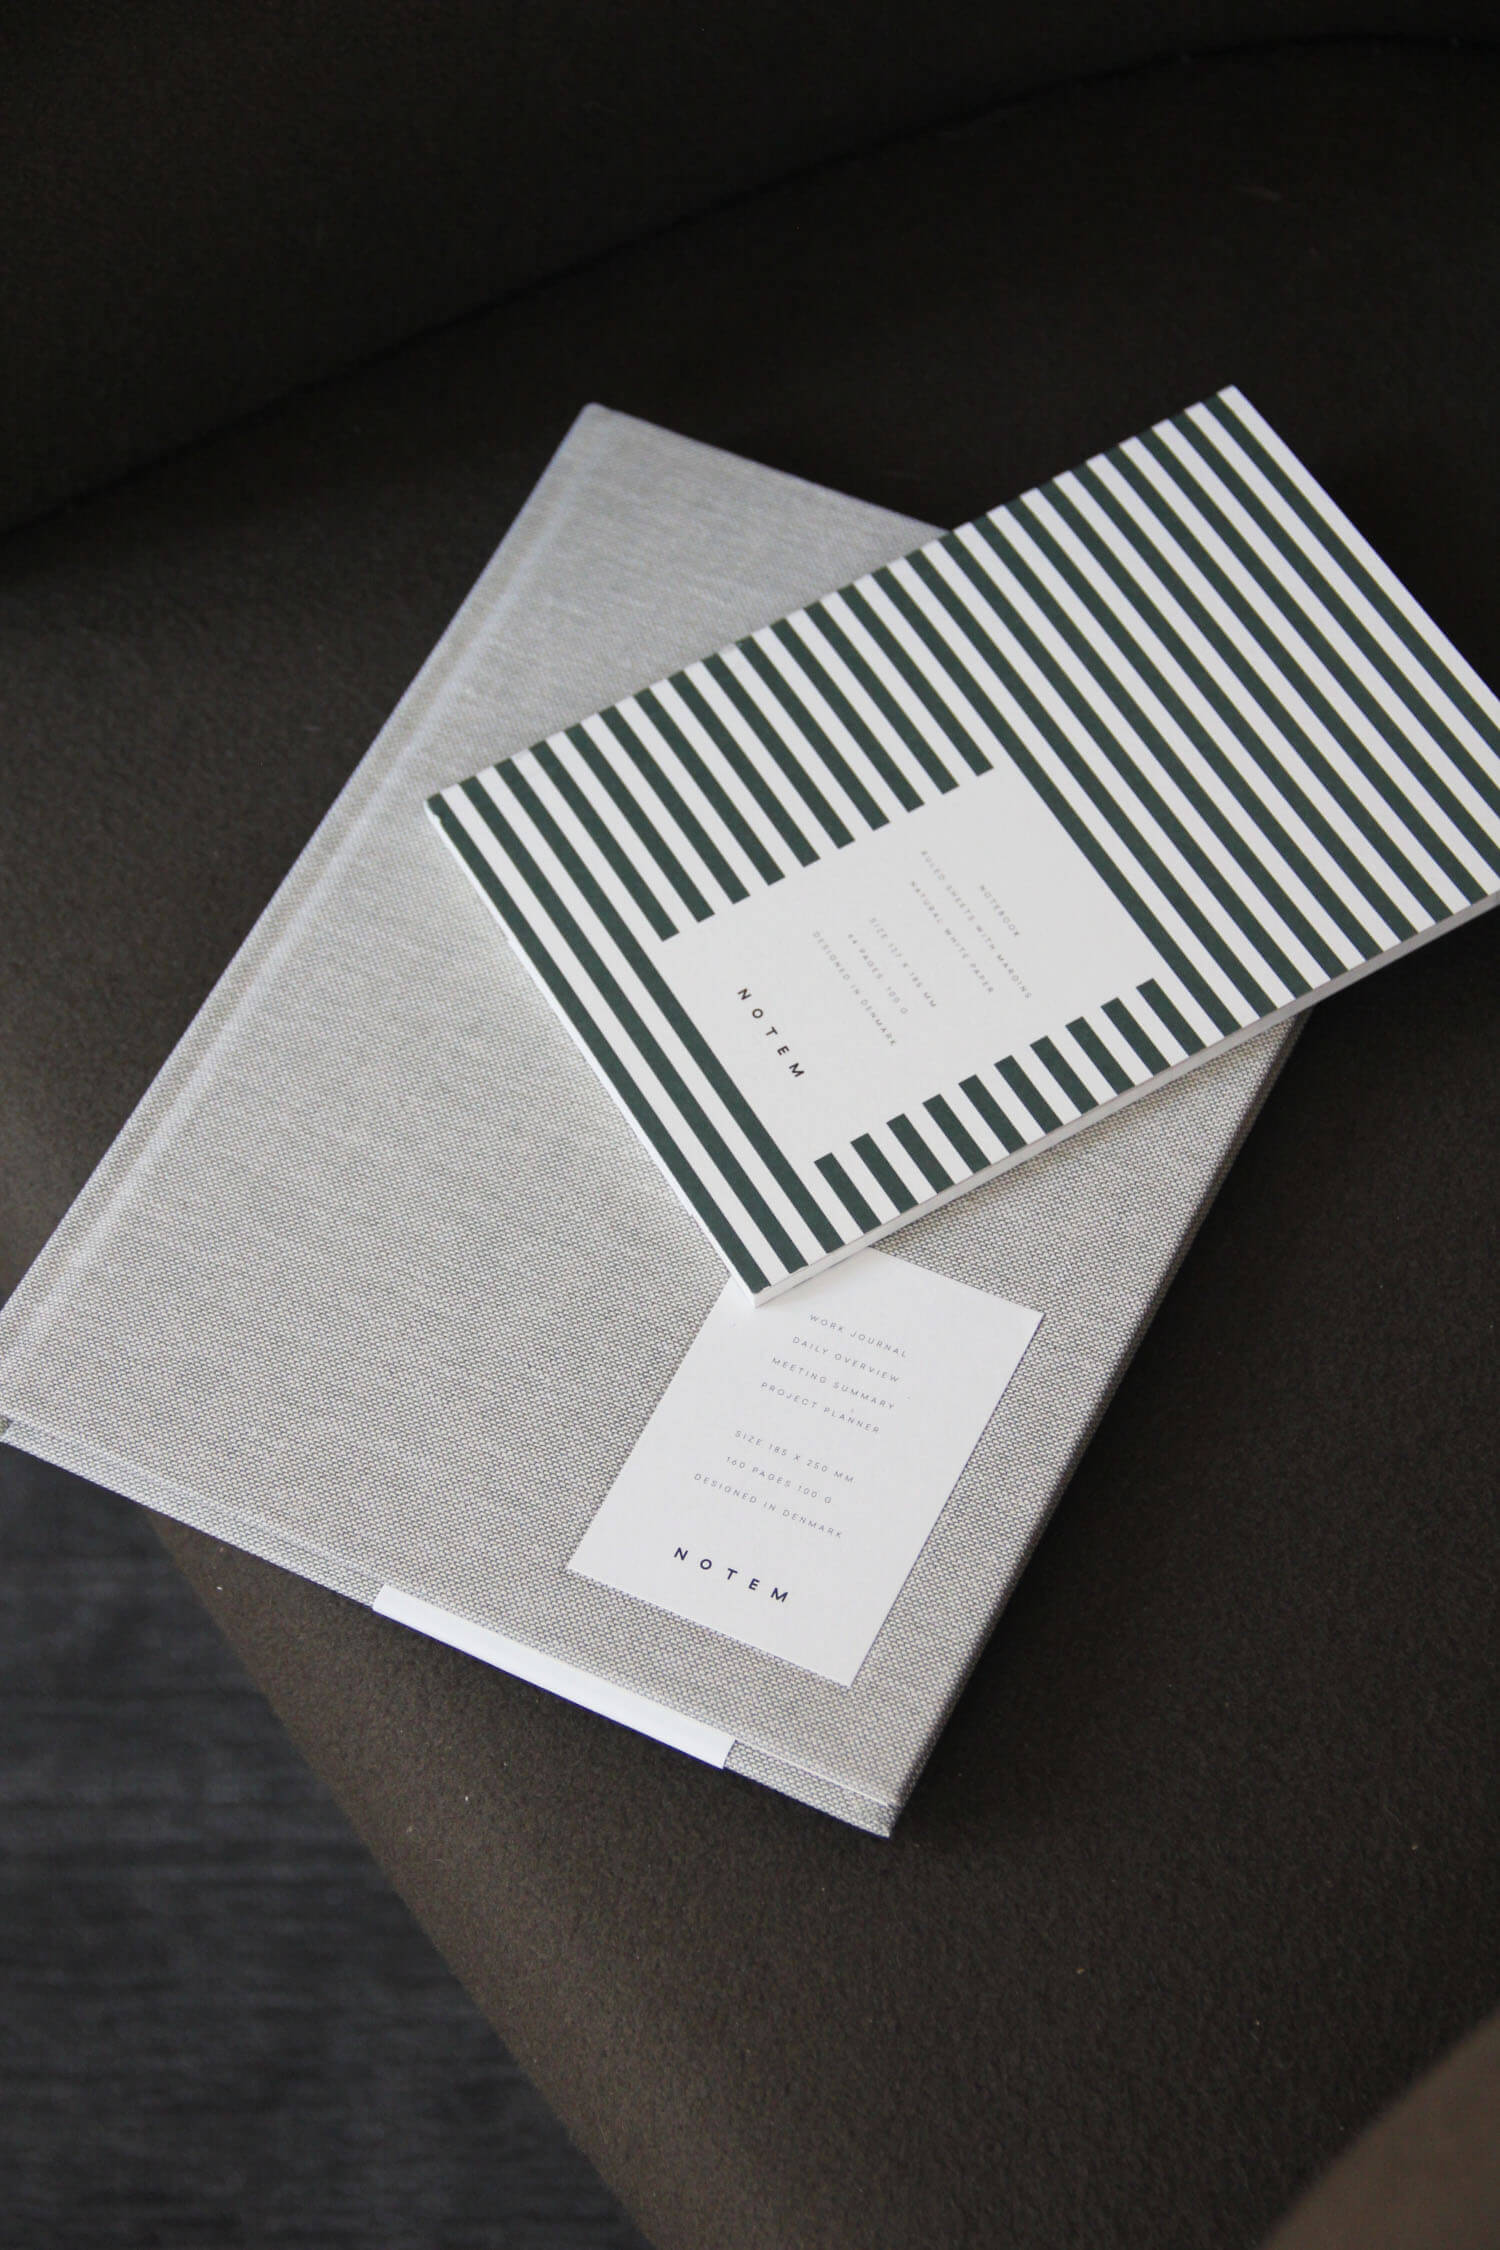 VITA | Small Notebook  | Dark Green Lines | Ruled | by Notem Studio - Lifestory - Notem Studio